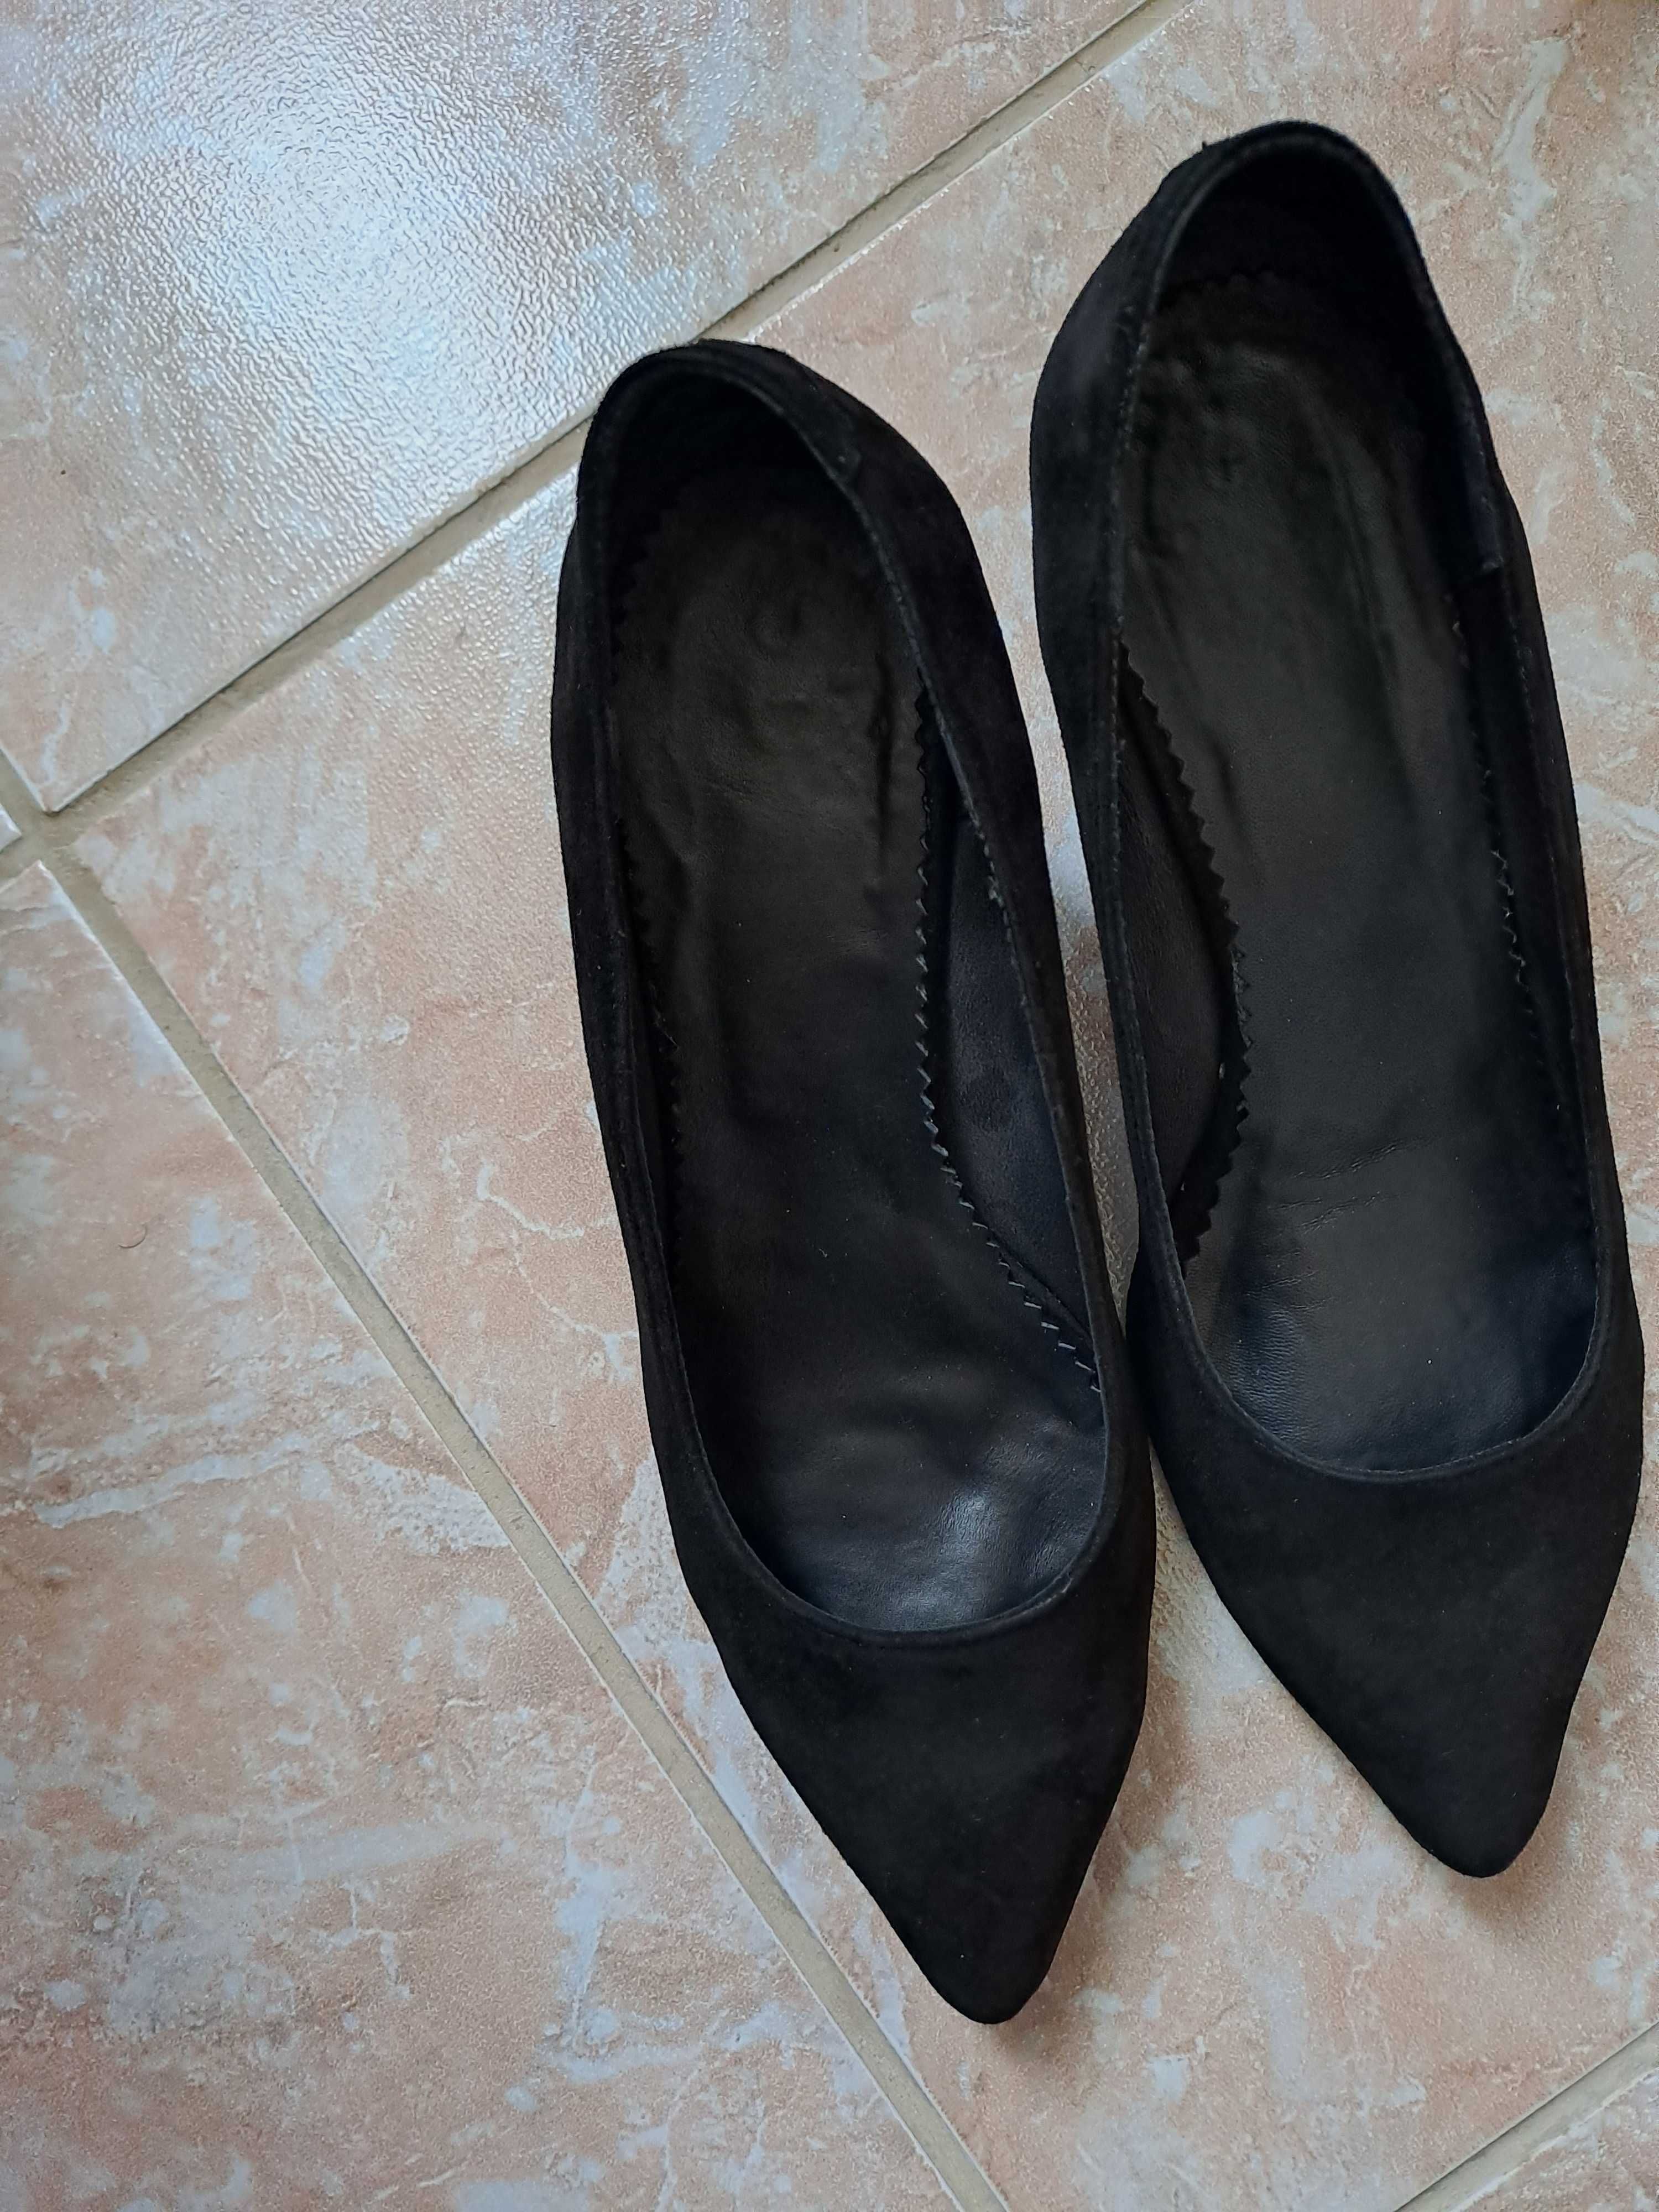 Pantofi dama negri masura 37 piele intoarsa